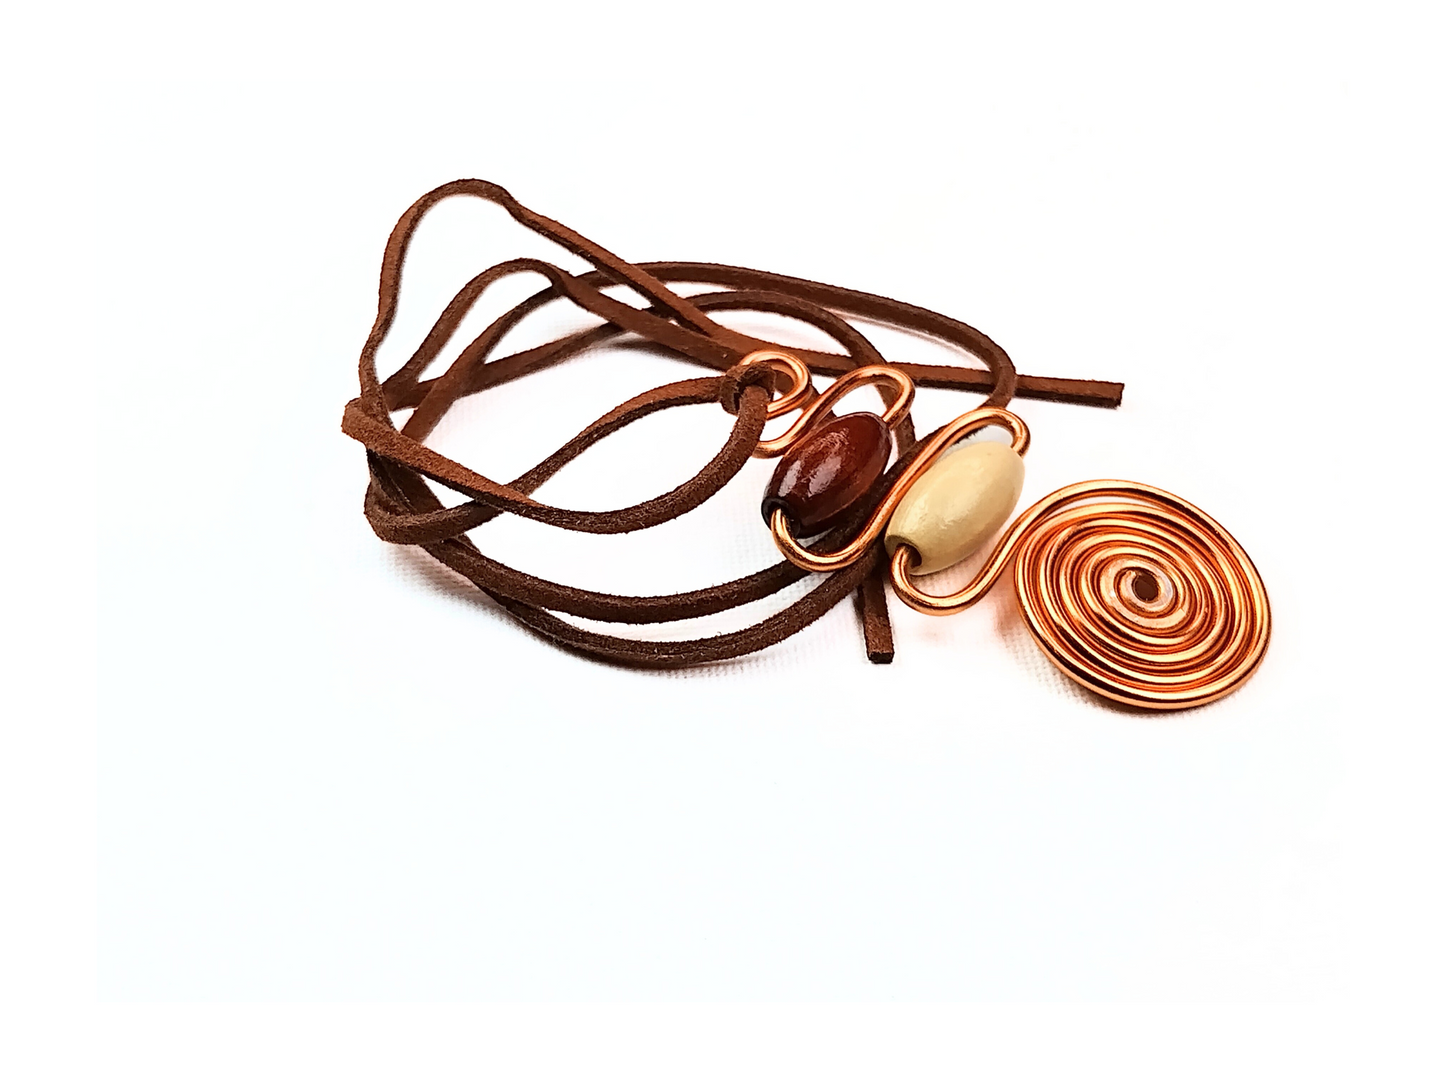 UNISEX Copper Wire-Wrapped Necklace (DESIGNER STATEMENT PIECE)